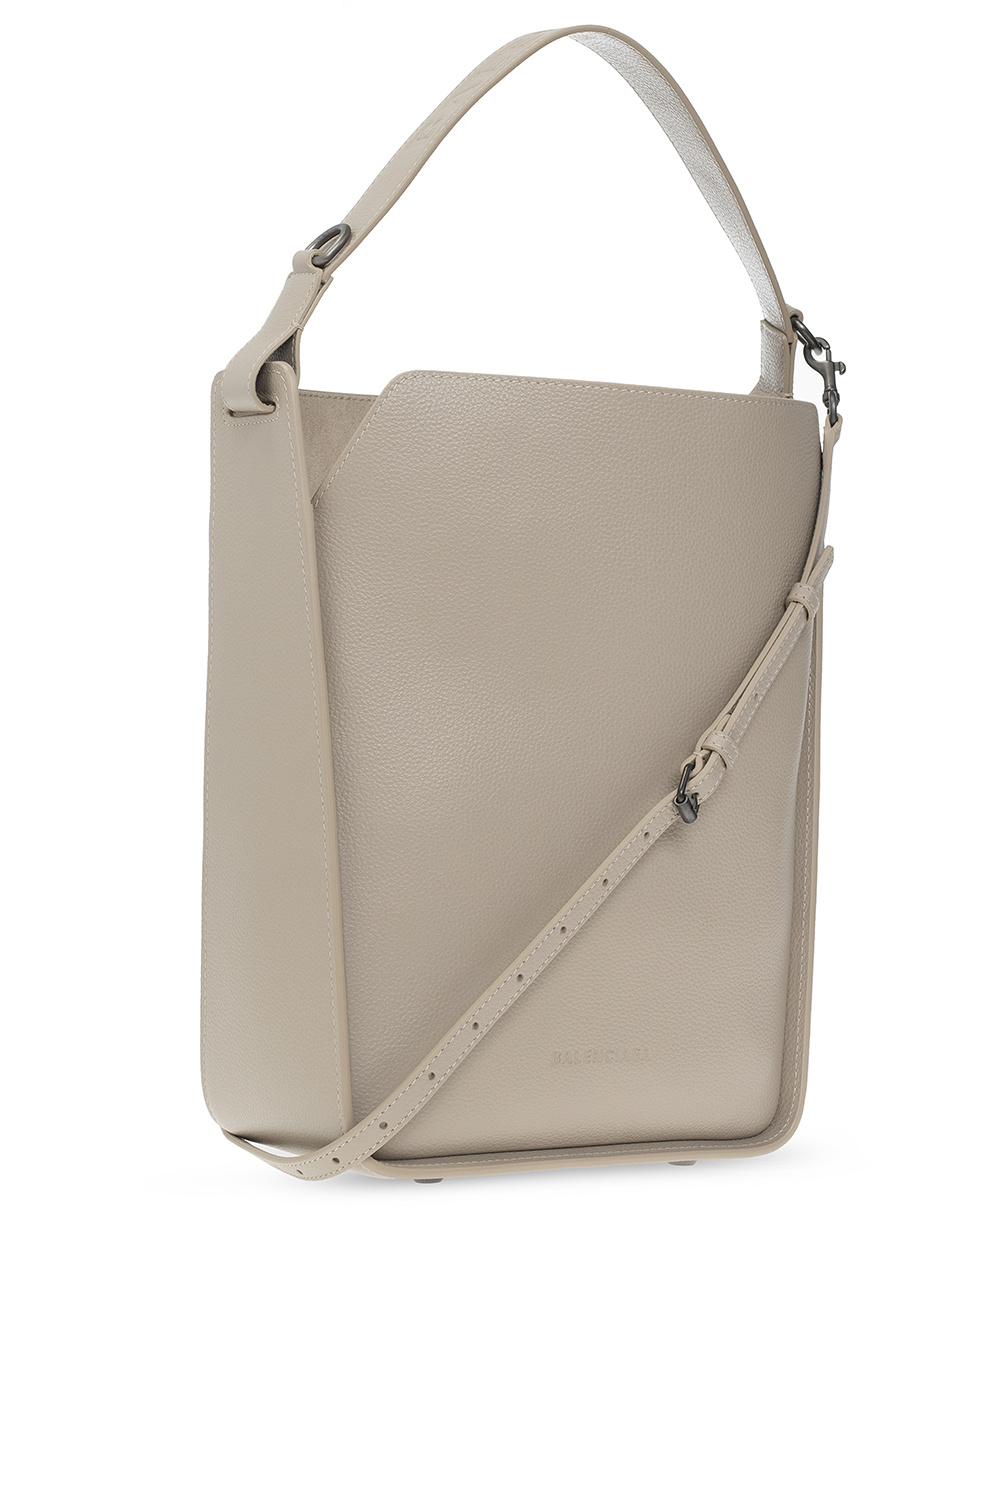 IetpShops KR - South Small' shopper bag Maison Balenciaga - 'Tool